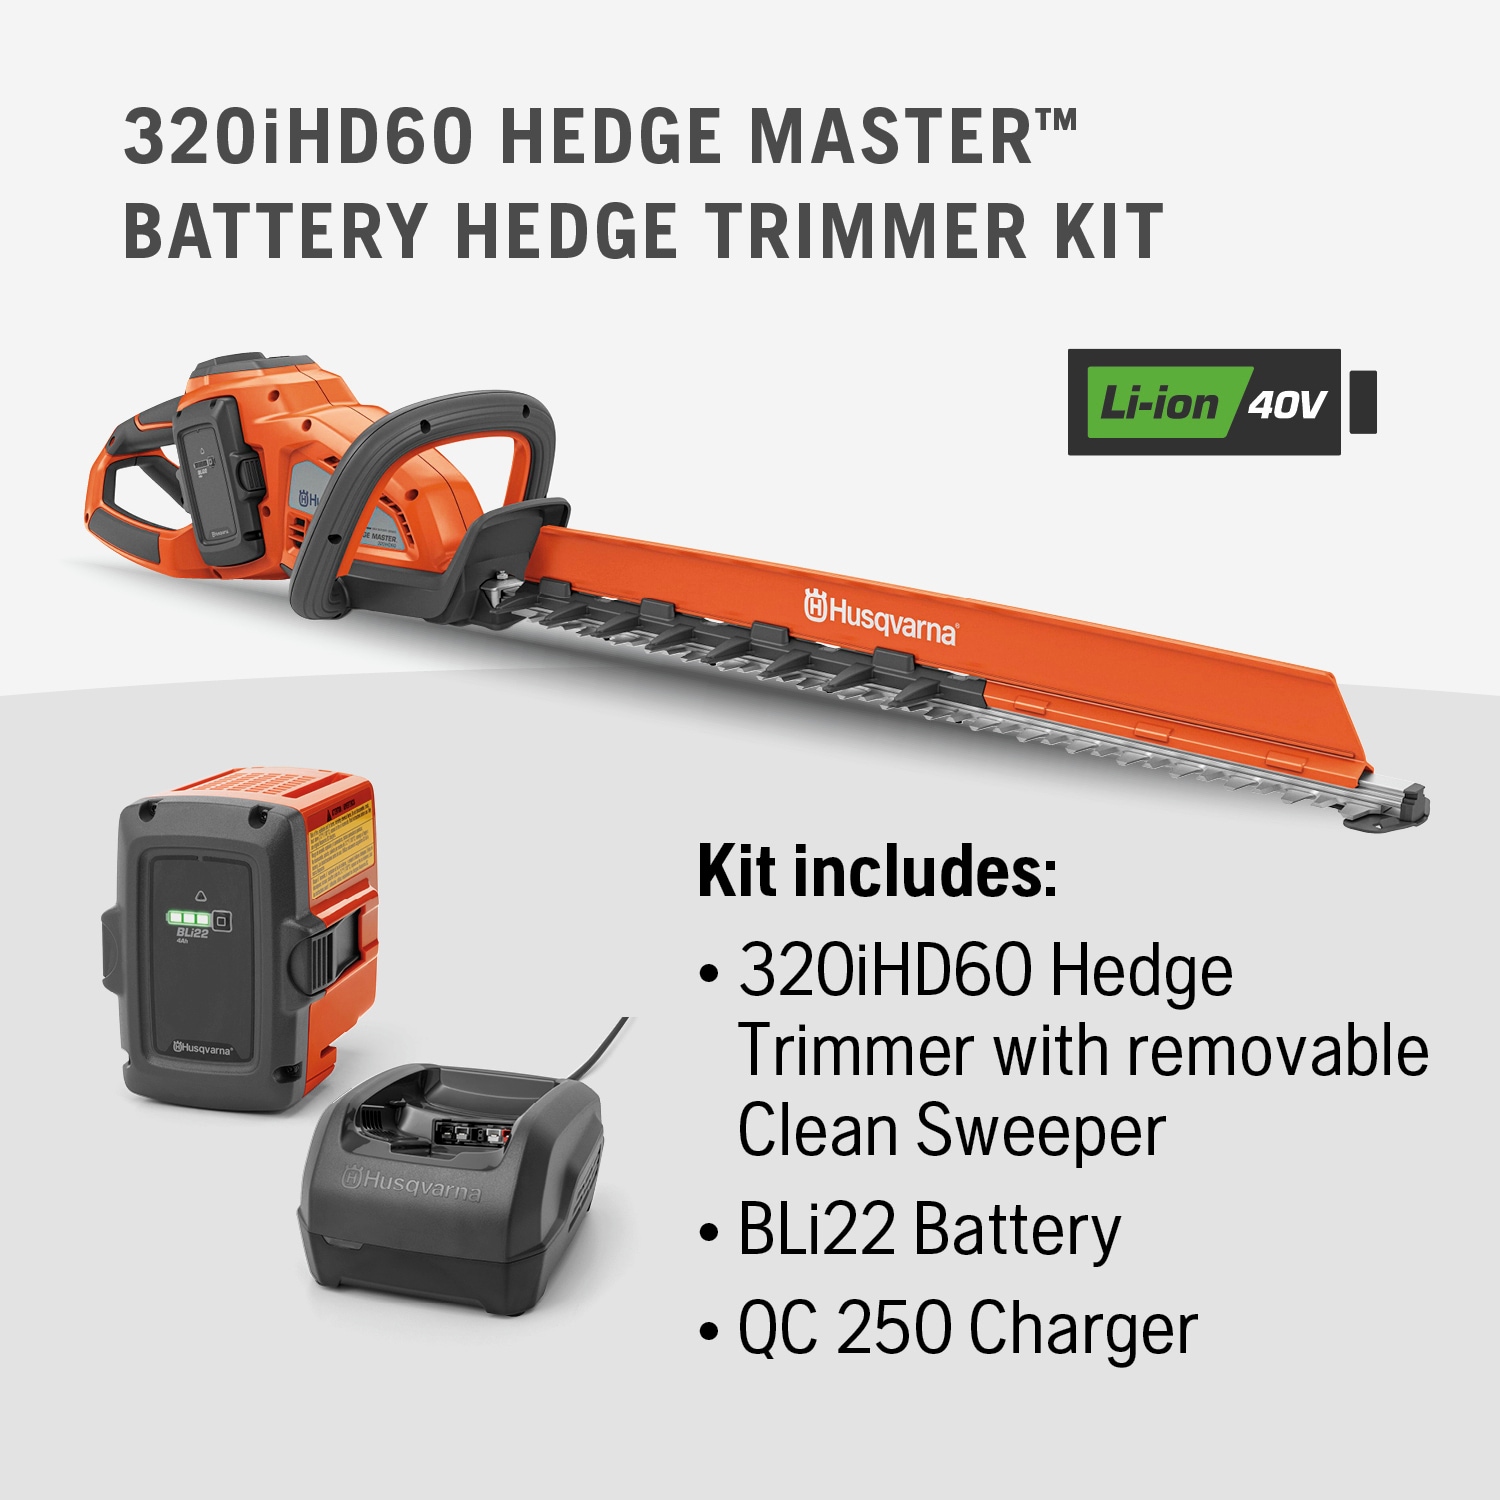 Husqvarna 522iHD60 Pro Battery Hedge Trimmer BARE TOOL